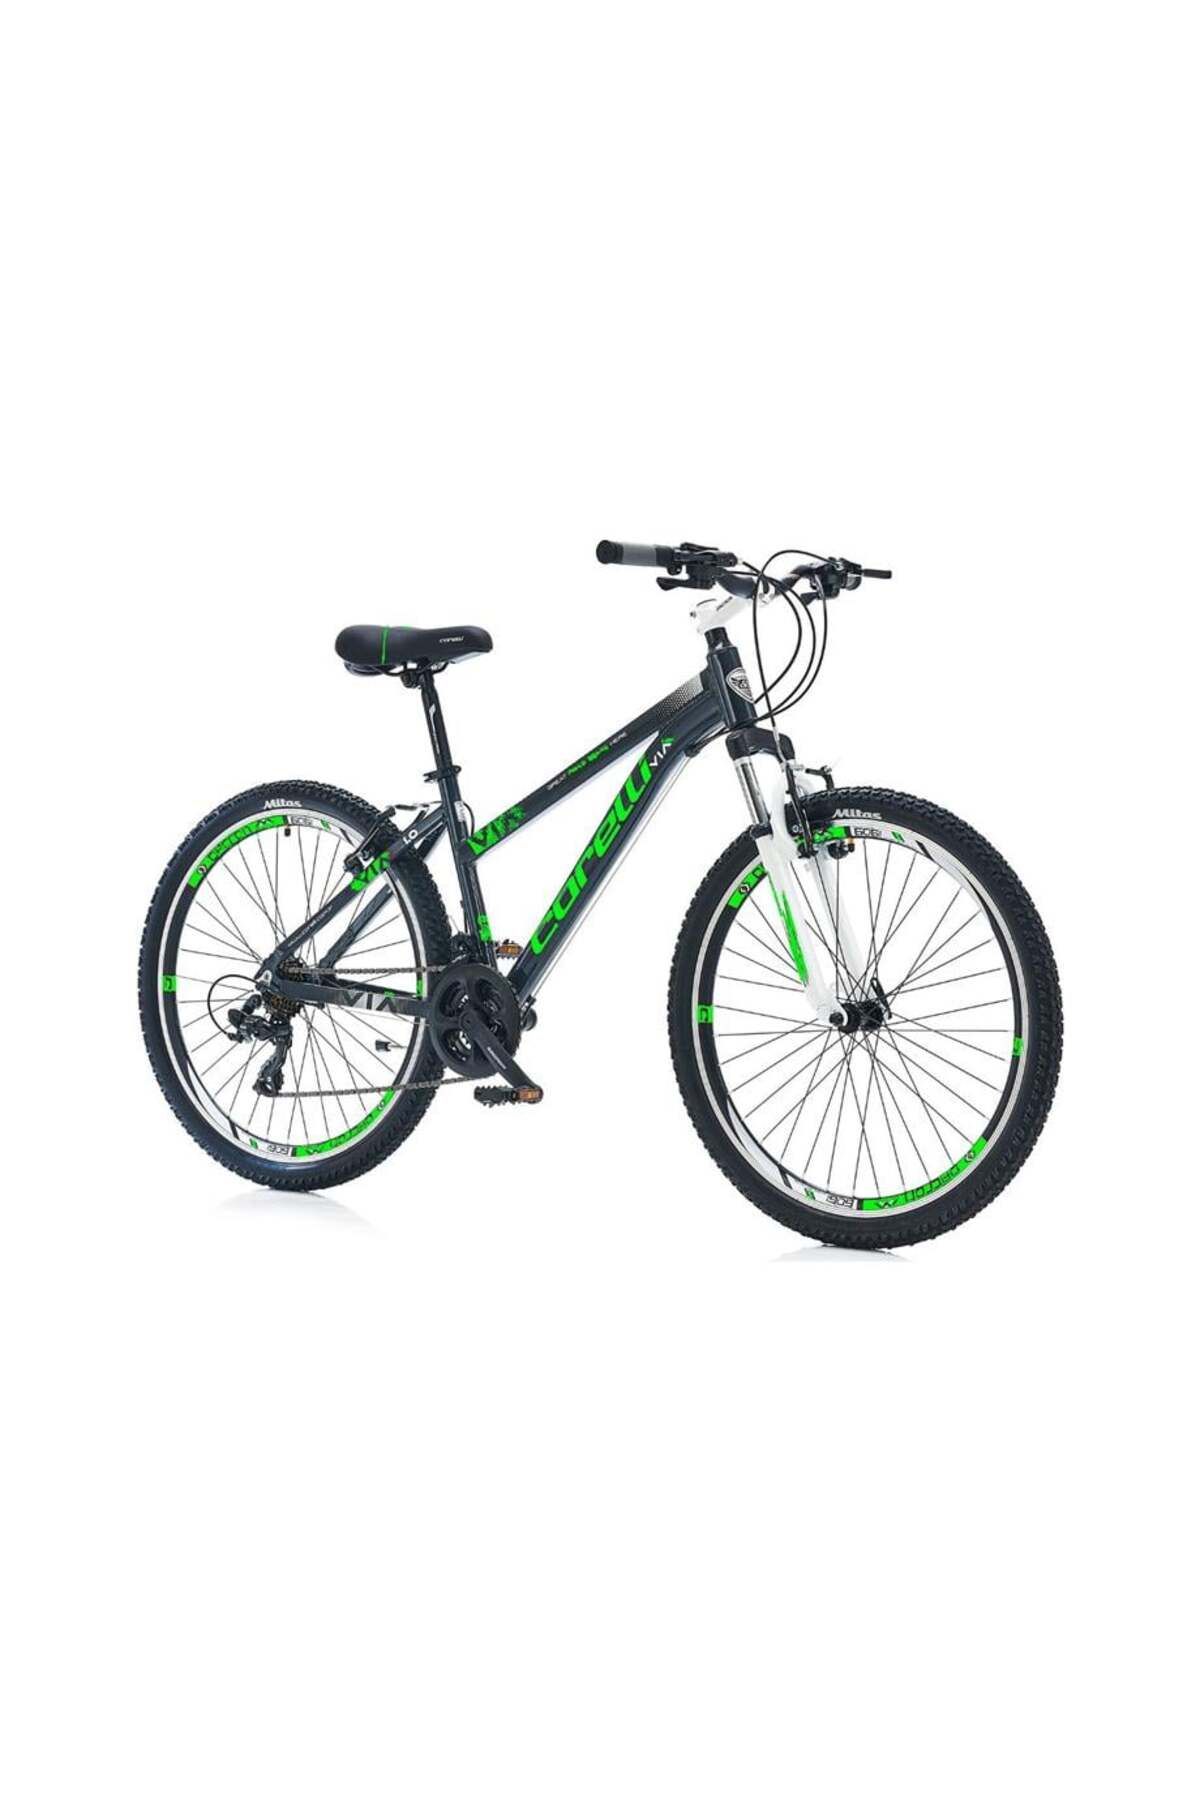 Corelli Vıa Lady 1.1 Dağ Bisikleti 332h V 24 Jant 21 Vites Siyah Yeşil